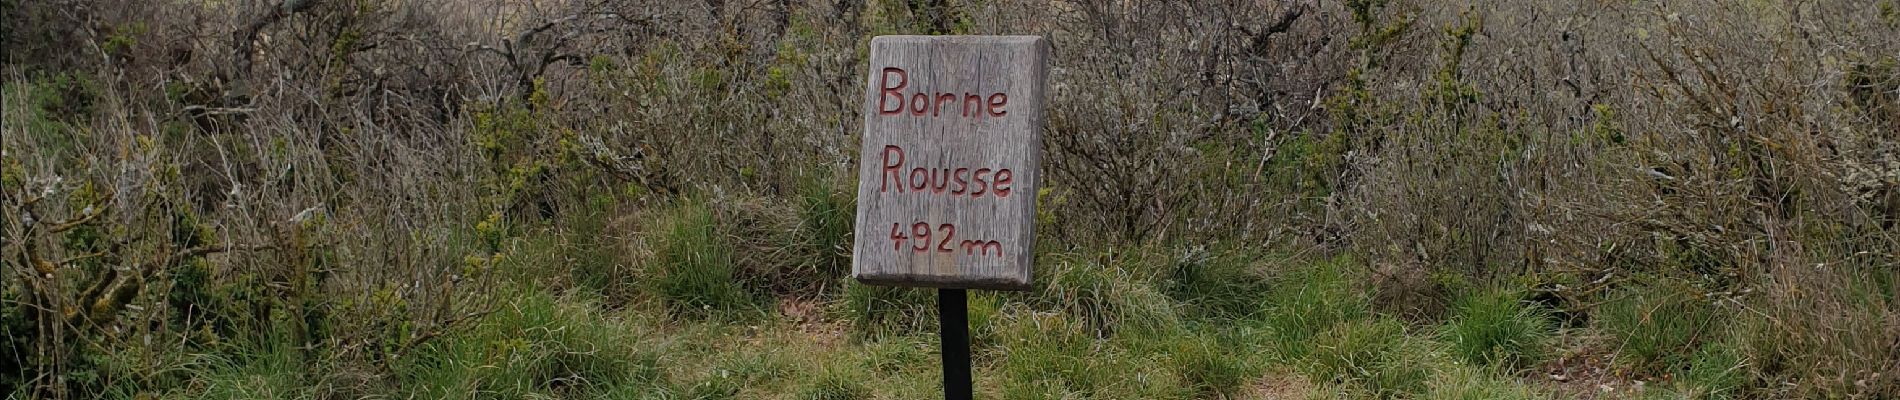 Excursión Senderismo La Laupie - Borne rousse - Photo